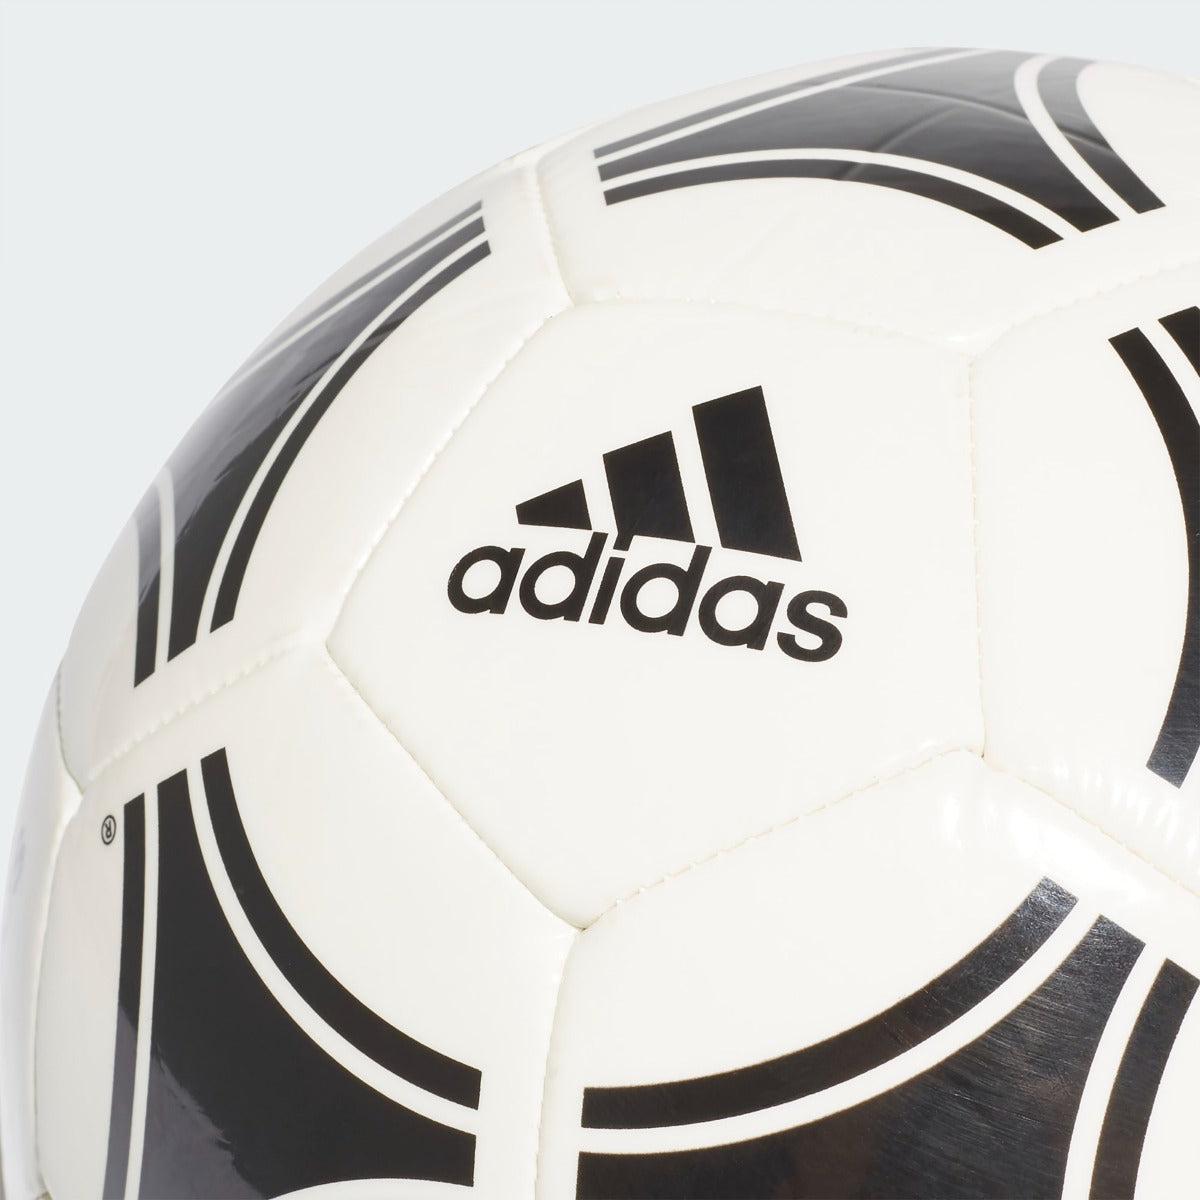 Adidas Tango Soccer Ball - White-Black